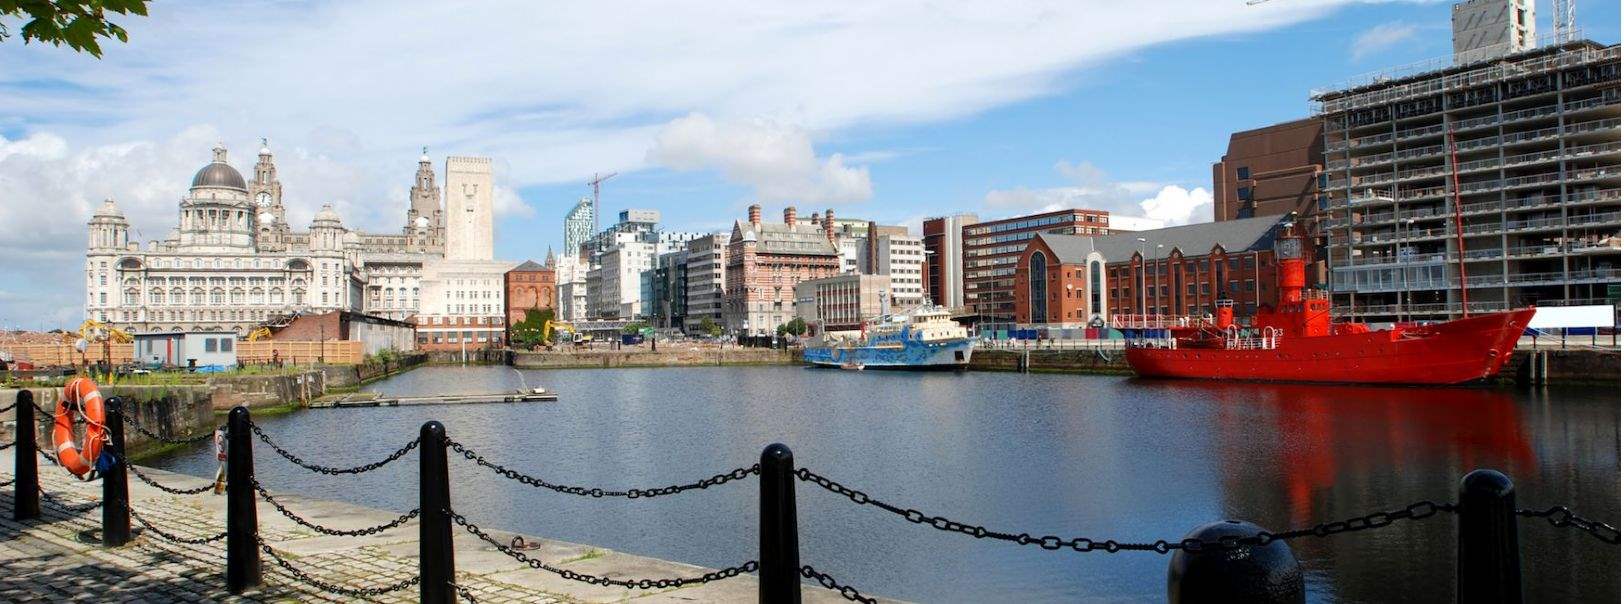 Albert Dock and Liver Building, Liverpool